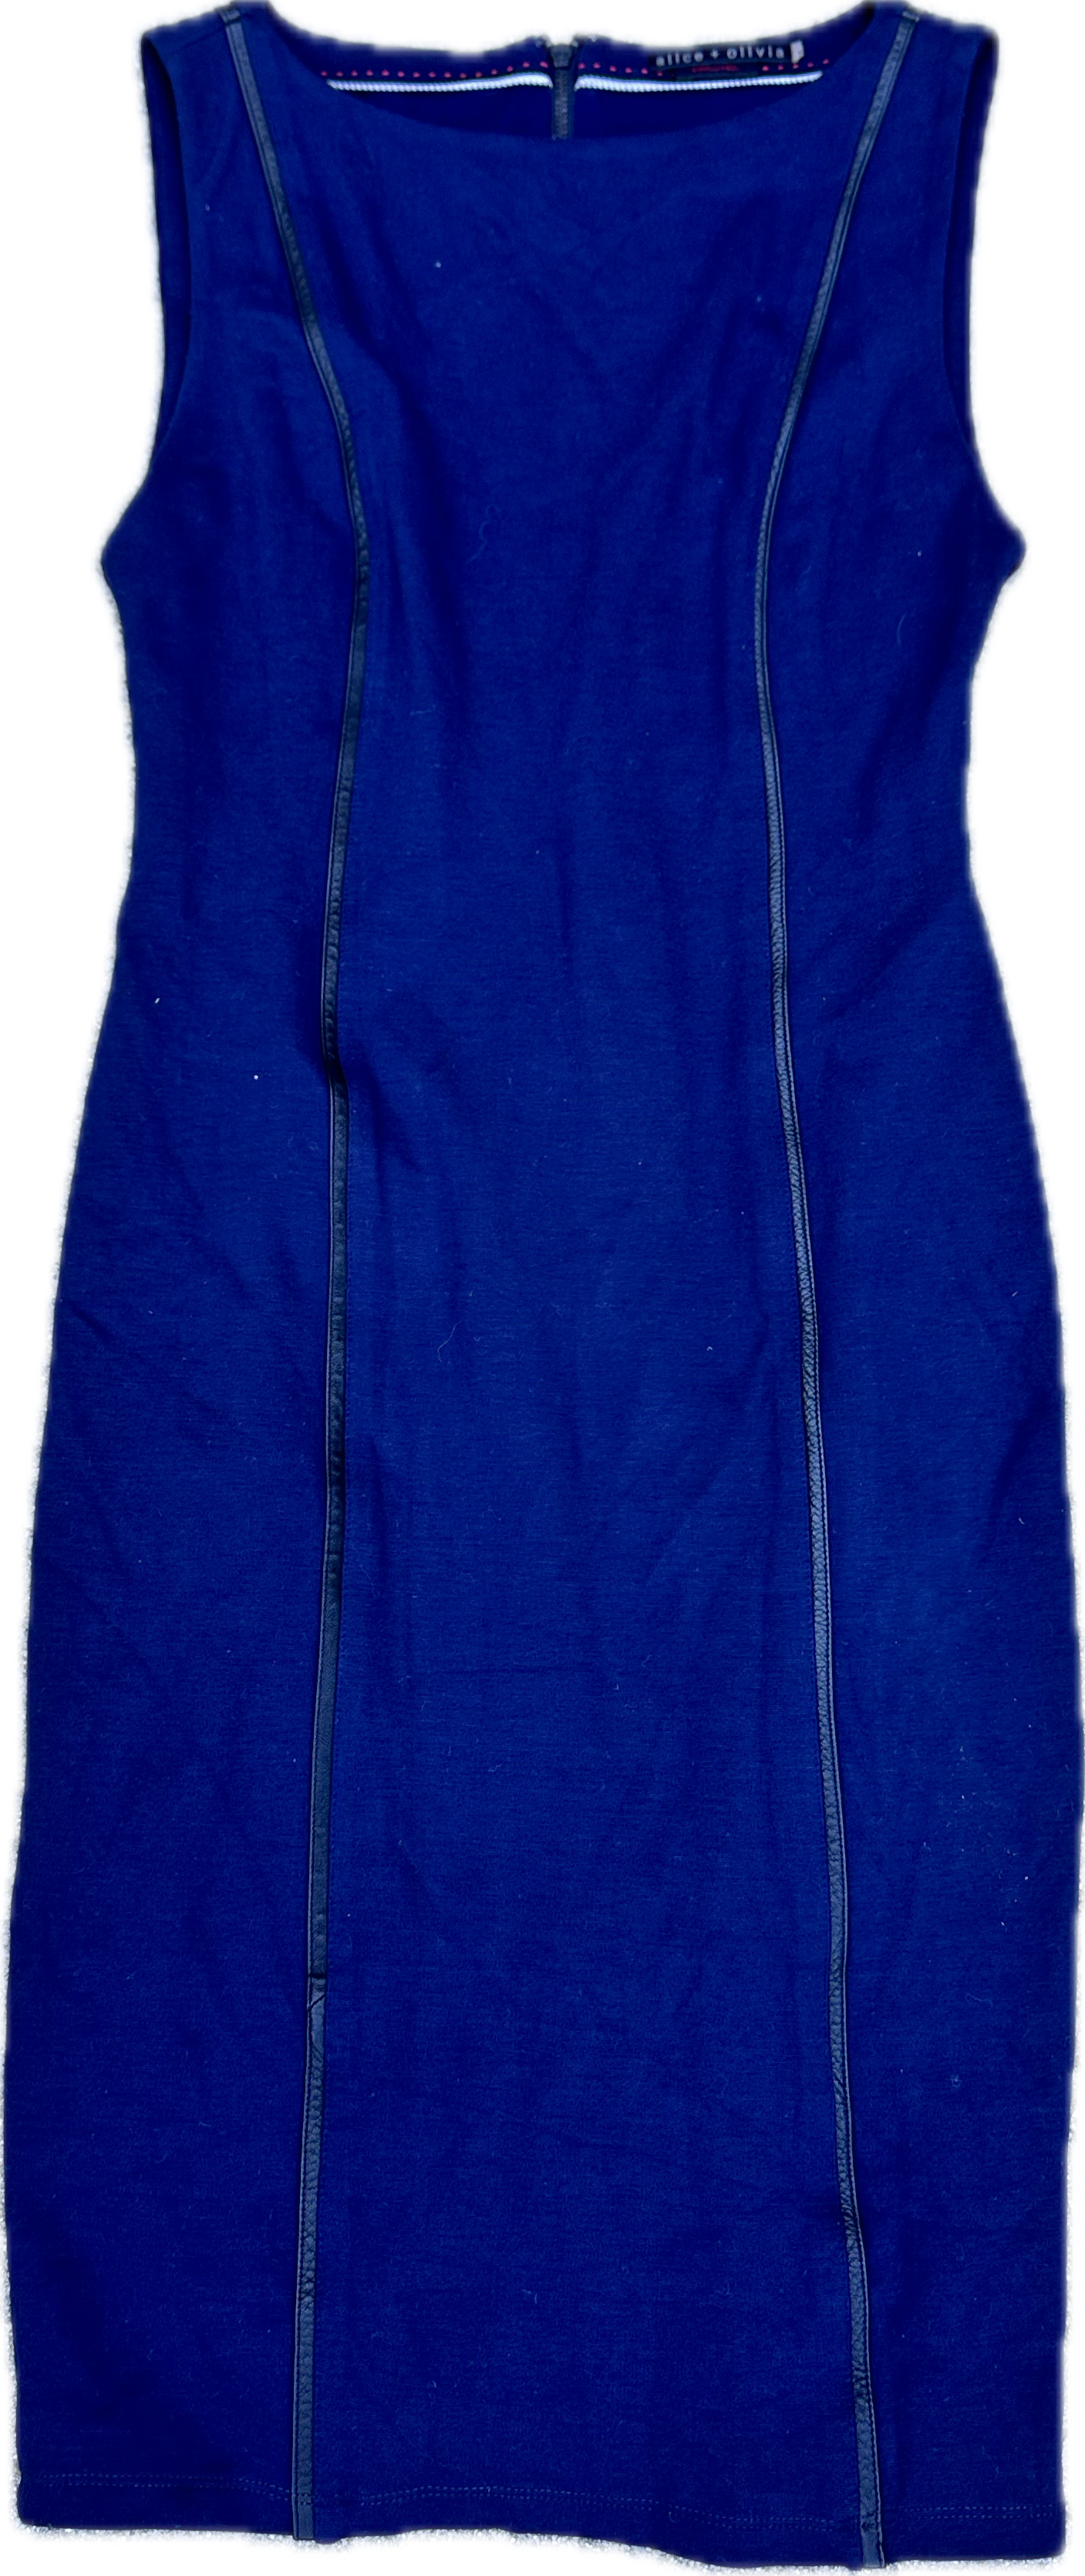 30 Rock: Liz Lemon's alice & olivia Navy Blue Dress (2)